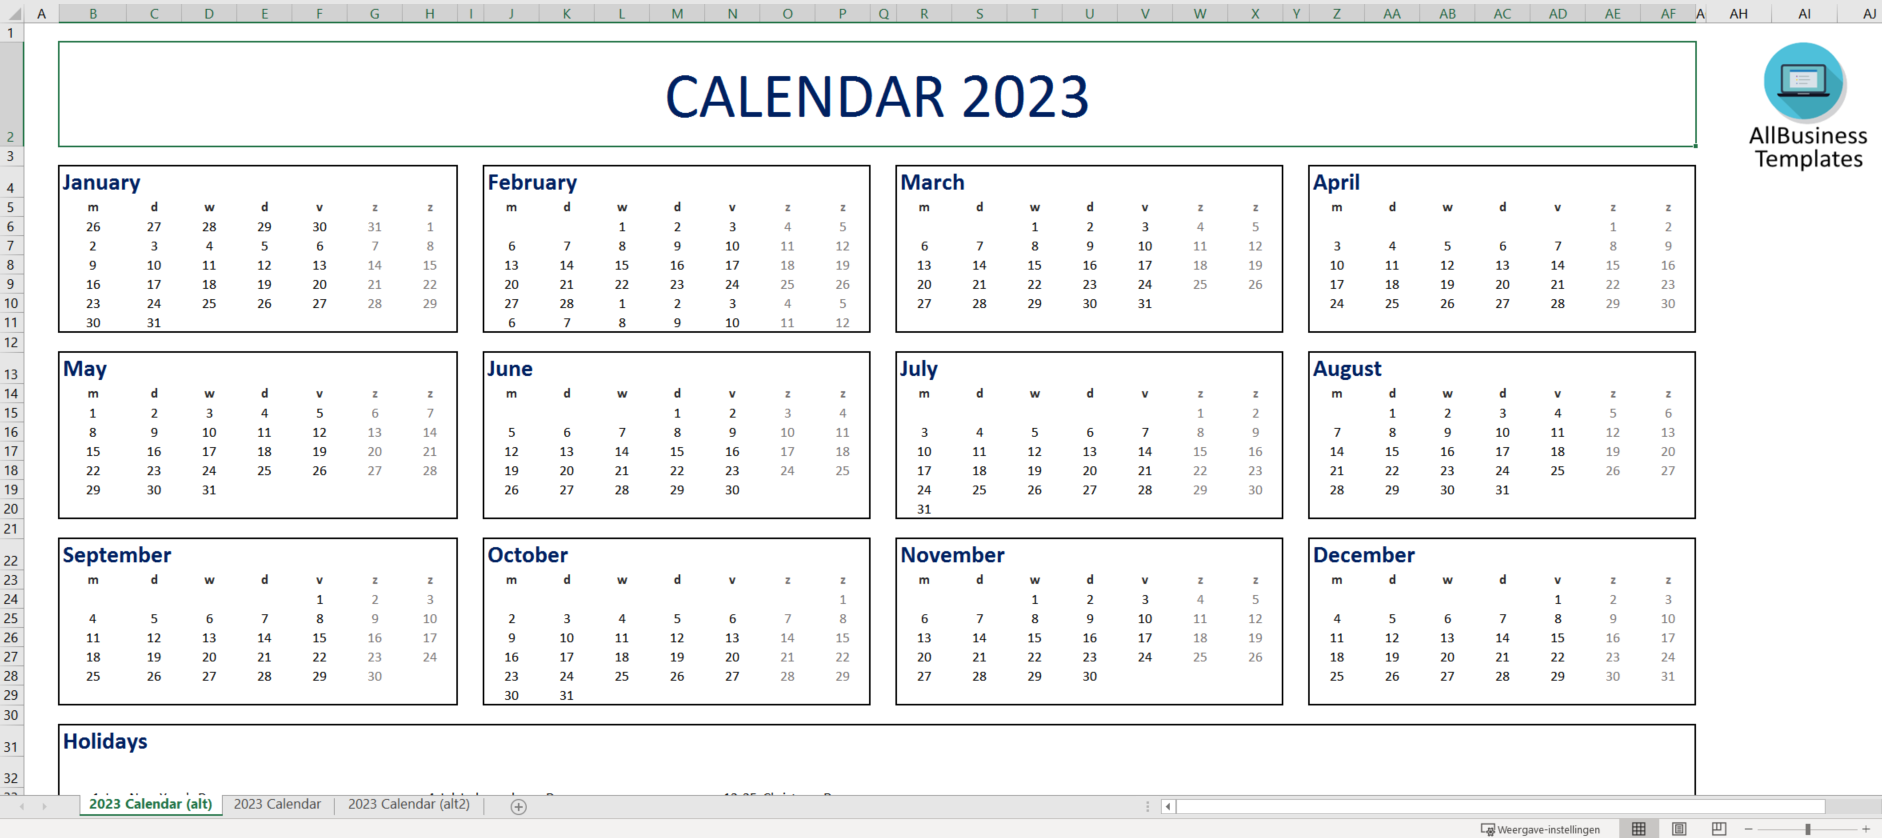 Calendar 2023 Excel Templates at